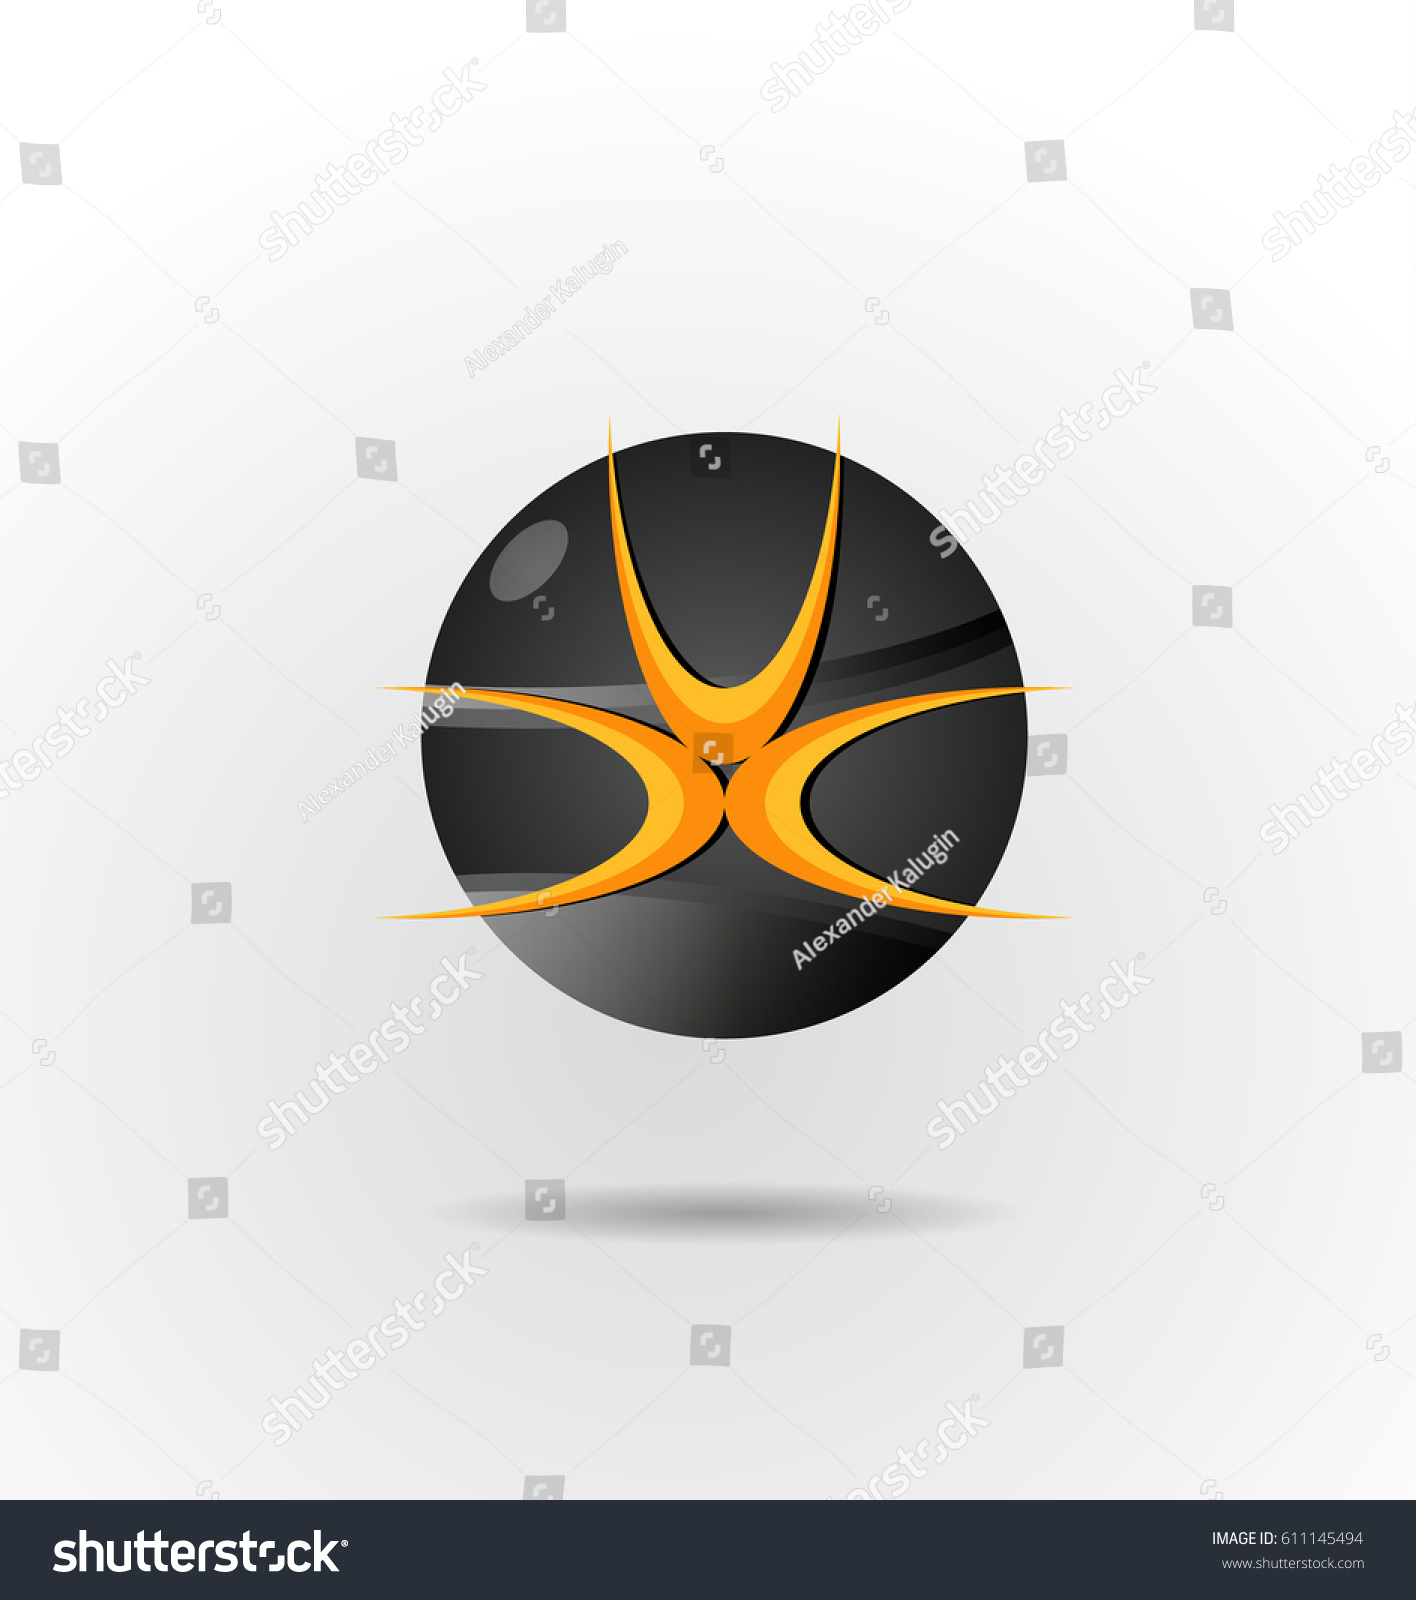 Edit Vectors Free Online - Company logo | Shutterstock Editor